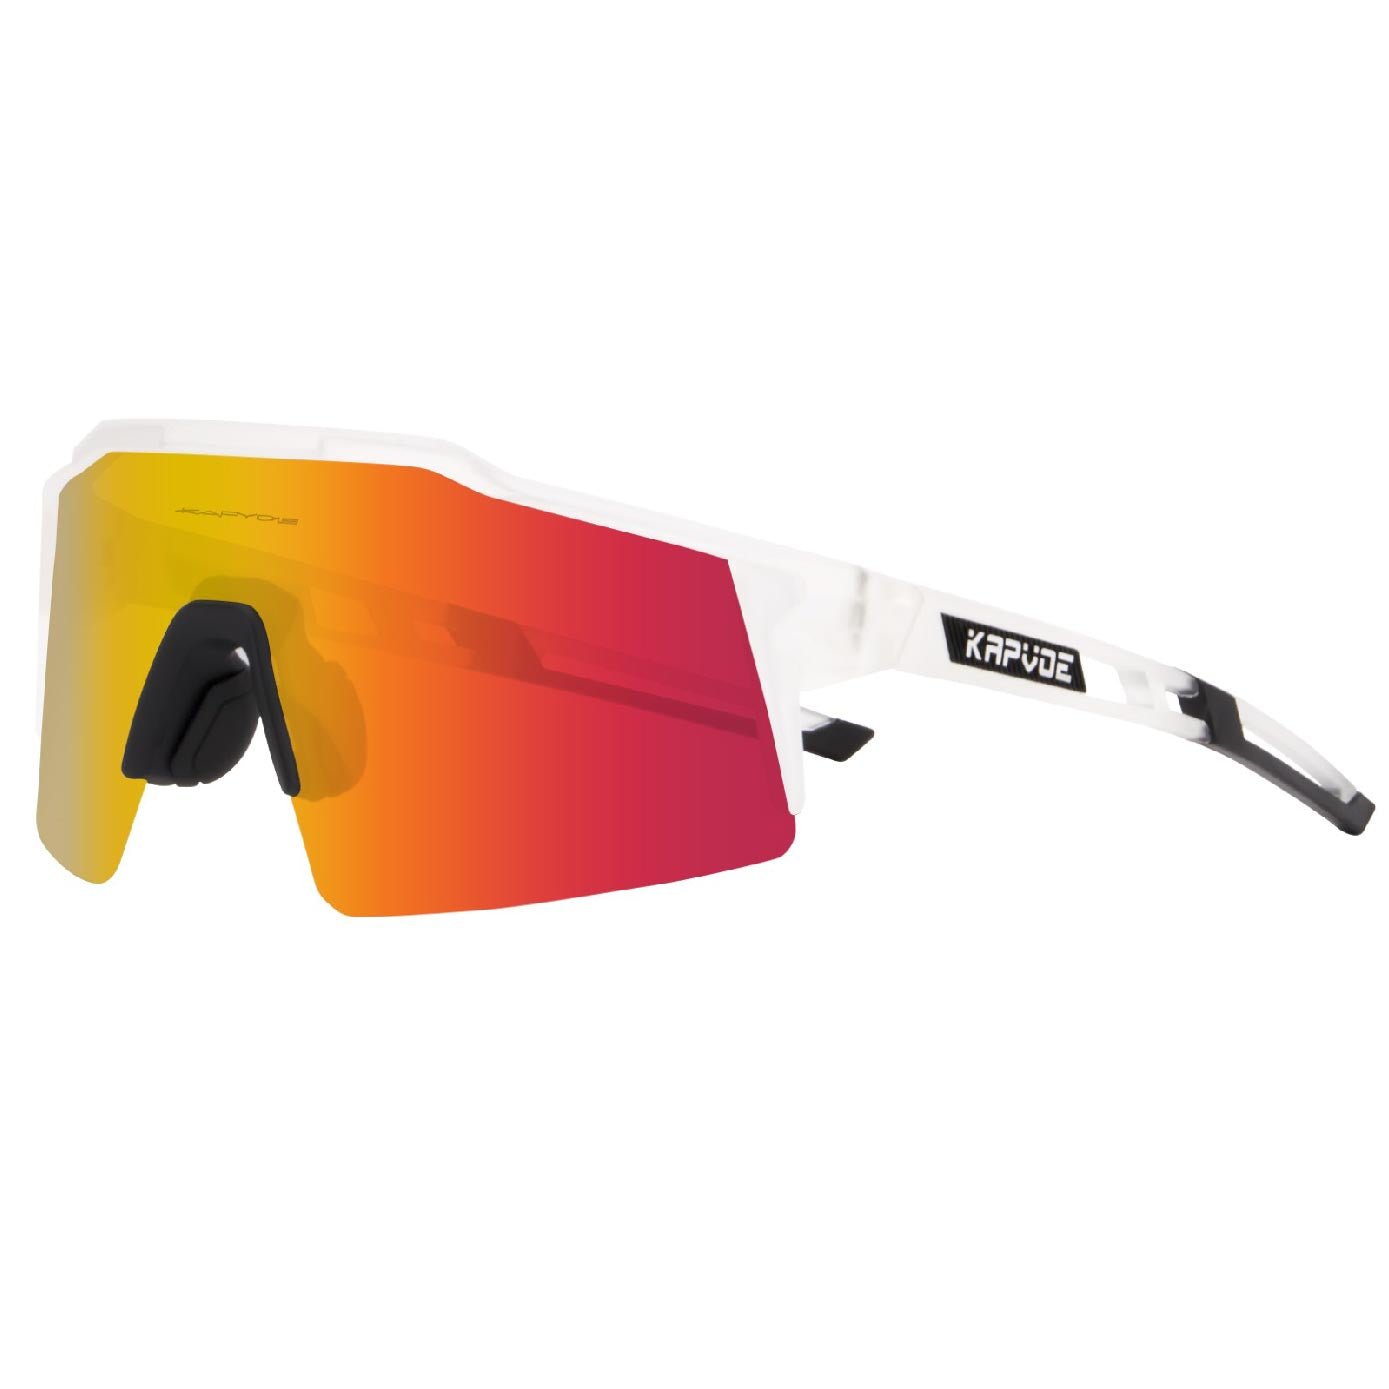 Visor Cycling Sunglasses